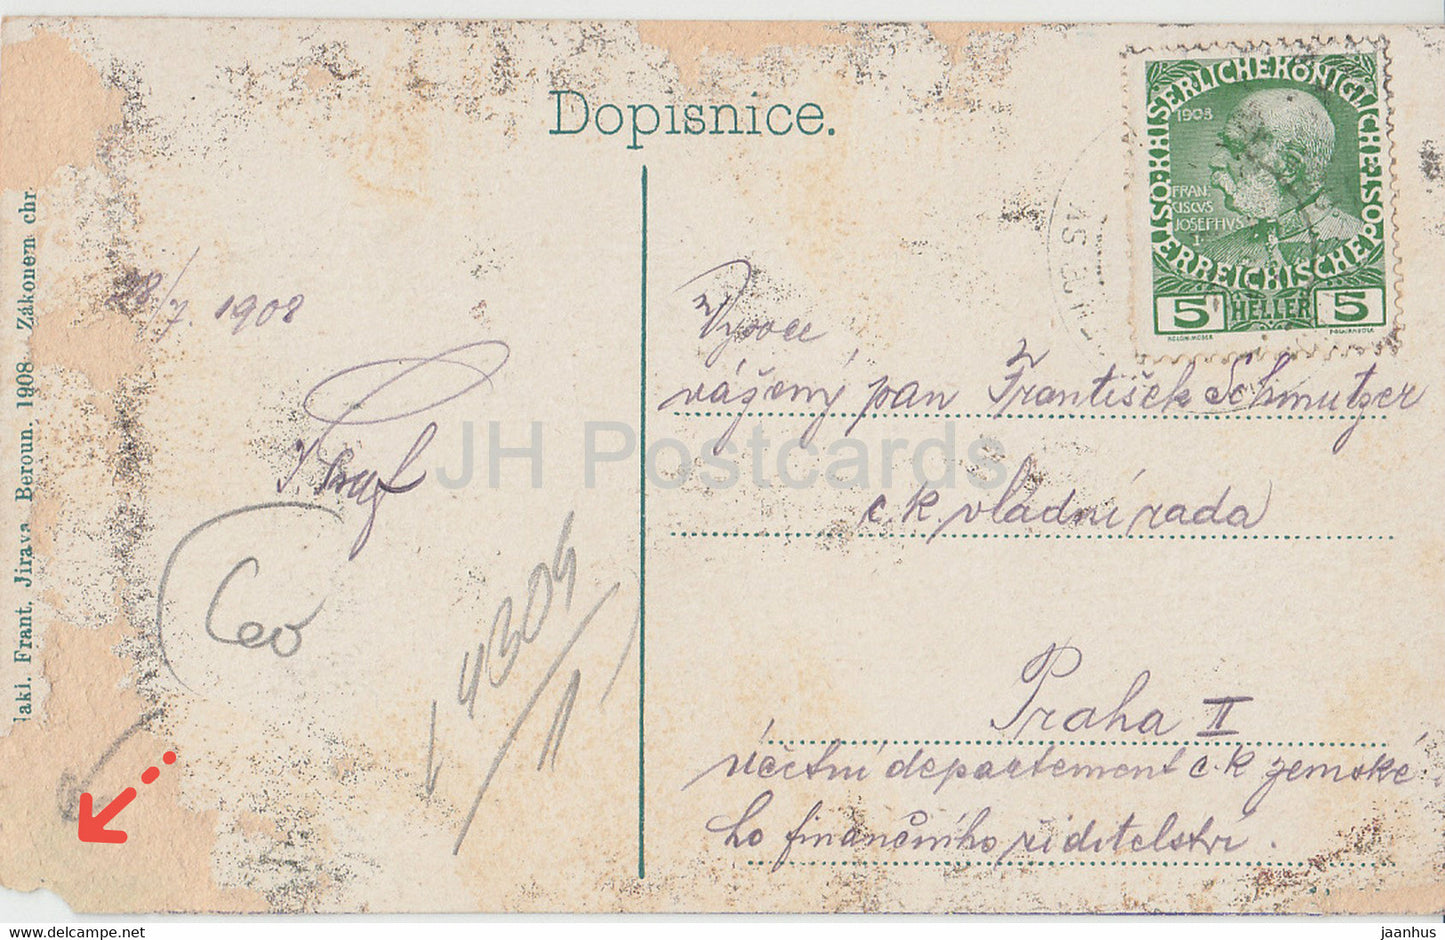 Sv Jan pod Skalou - alte Postkarte - 1908 - Tschechische Republik - gebraucht